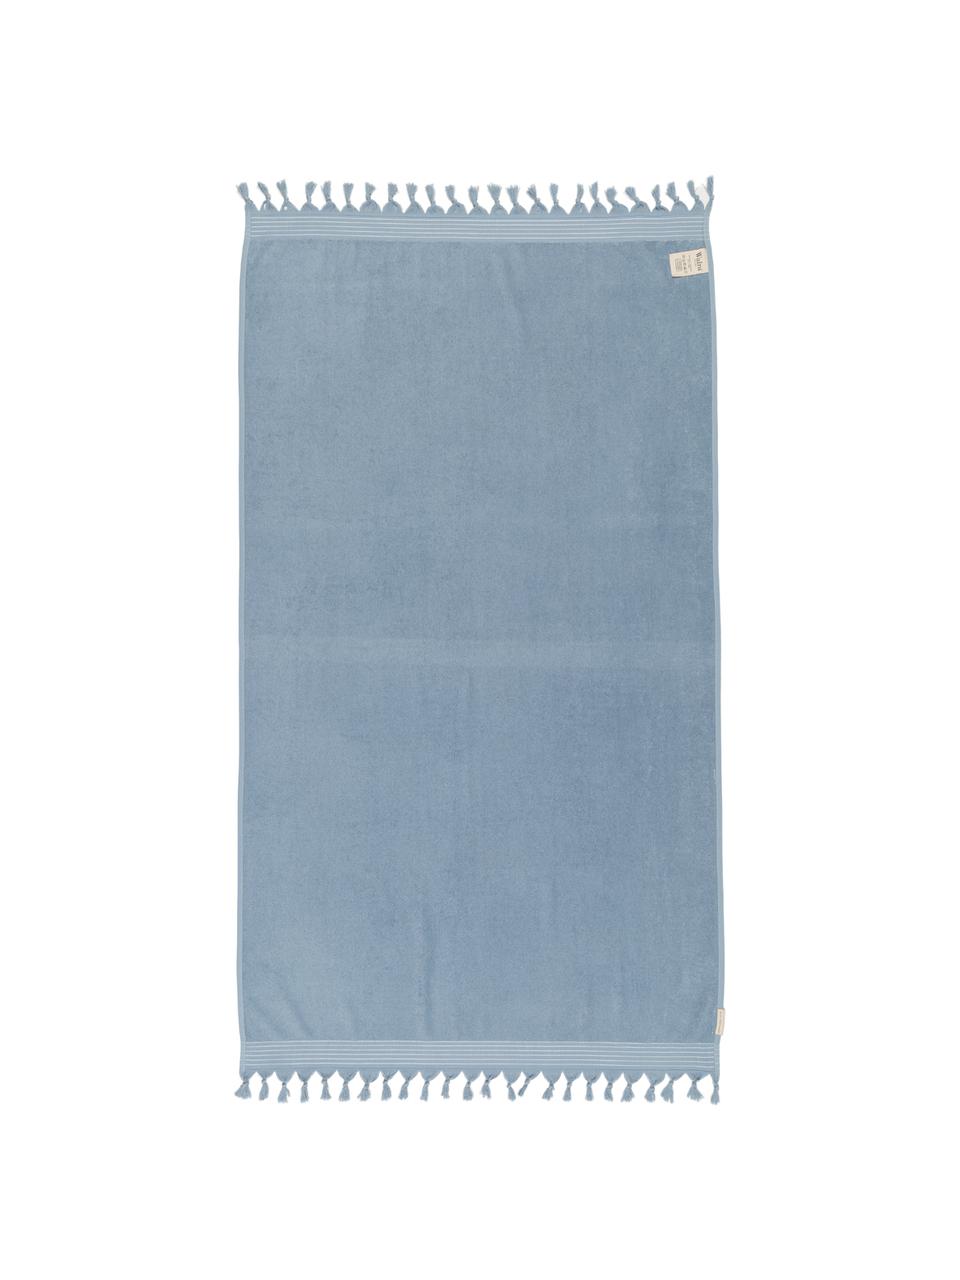 Telo mare Soft Cotton, Retro: Terry, Blu, bianco, Larg. 100 x Lung. 180 cm